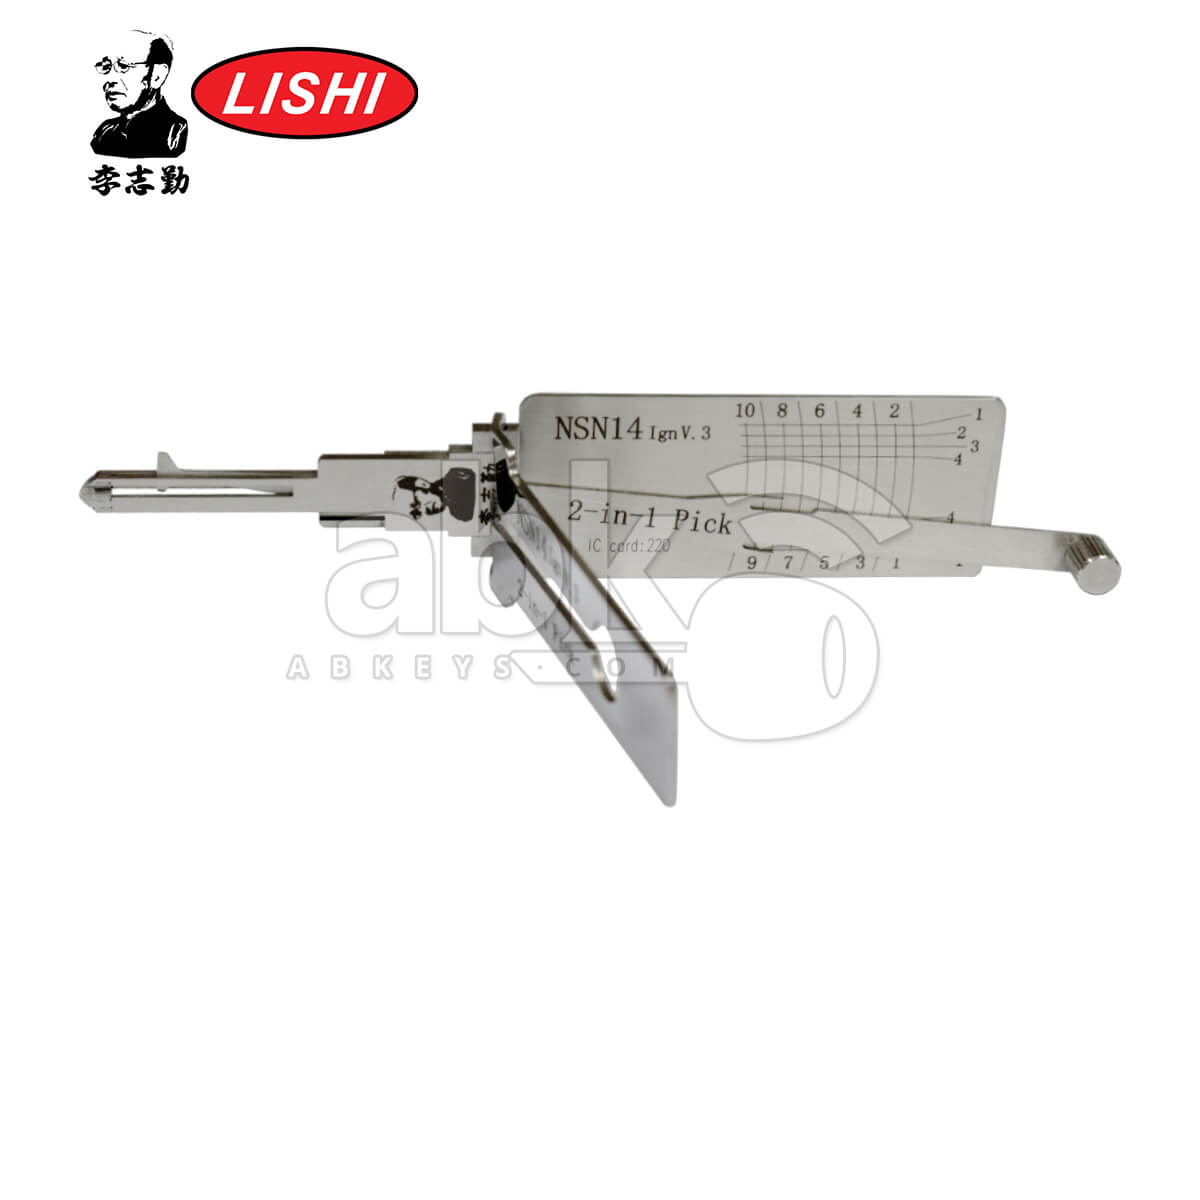 Original Lishi NSN14 3-in-1 Pick & Decoder for Nissan Lishi Tool - ABK-5272 - ABKEYS.COM